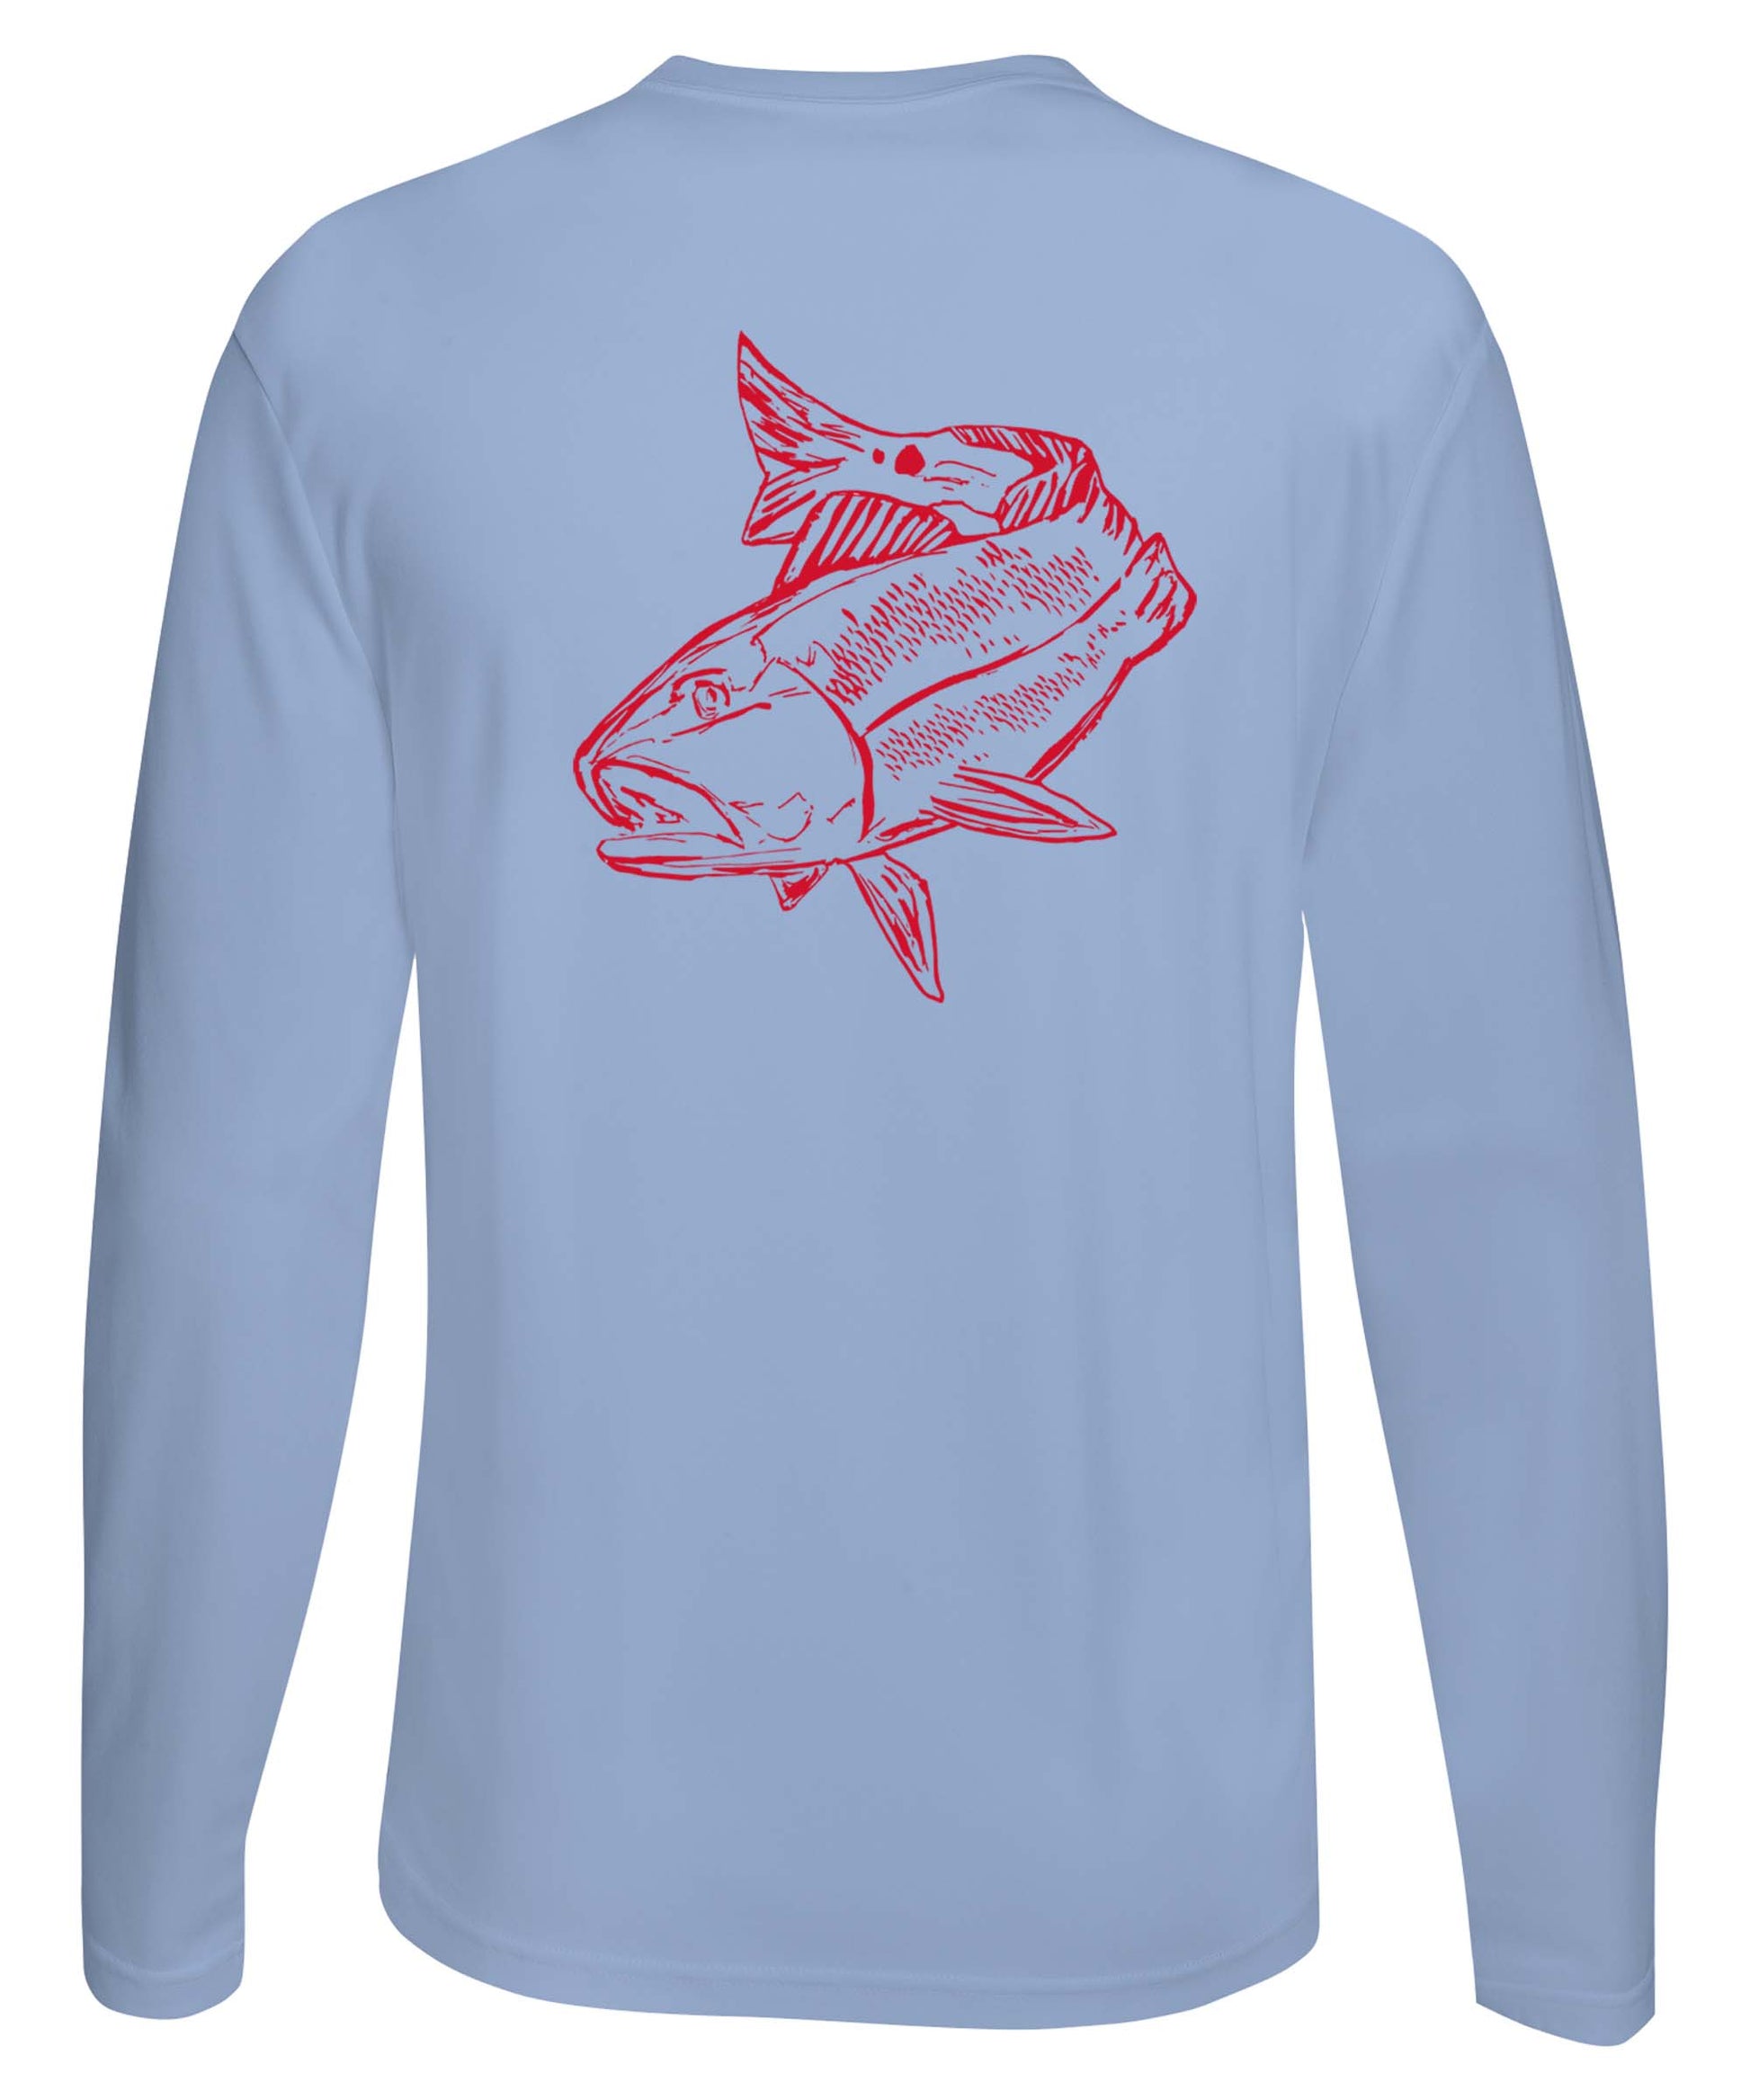 New Redfish Design! Performance Shirts, Hoodies, Digital Camo, 50+Upf L / Lt. Blue L/S - unisex